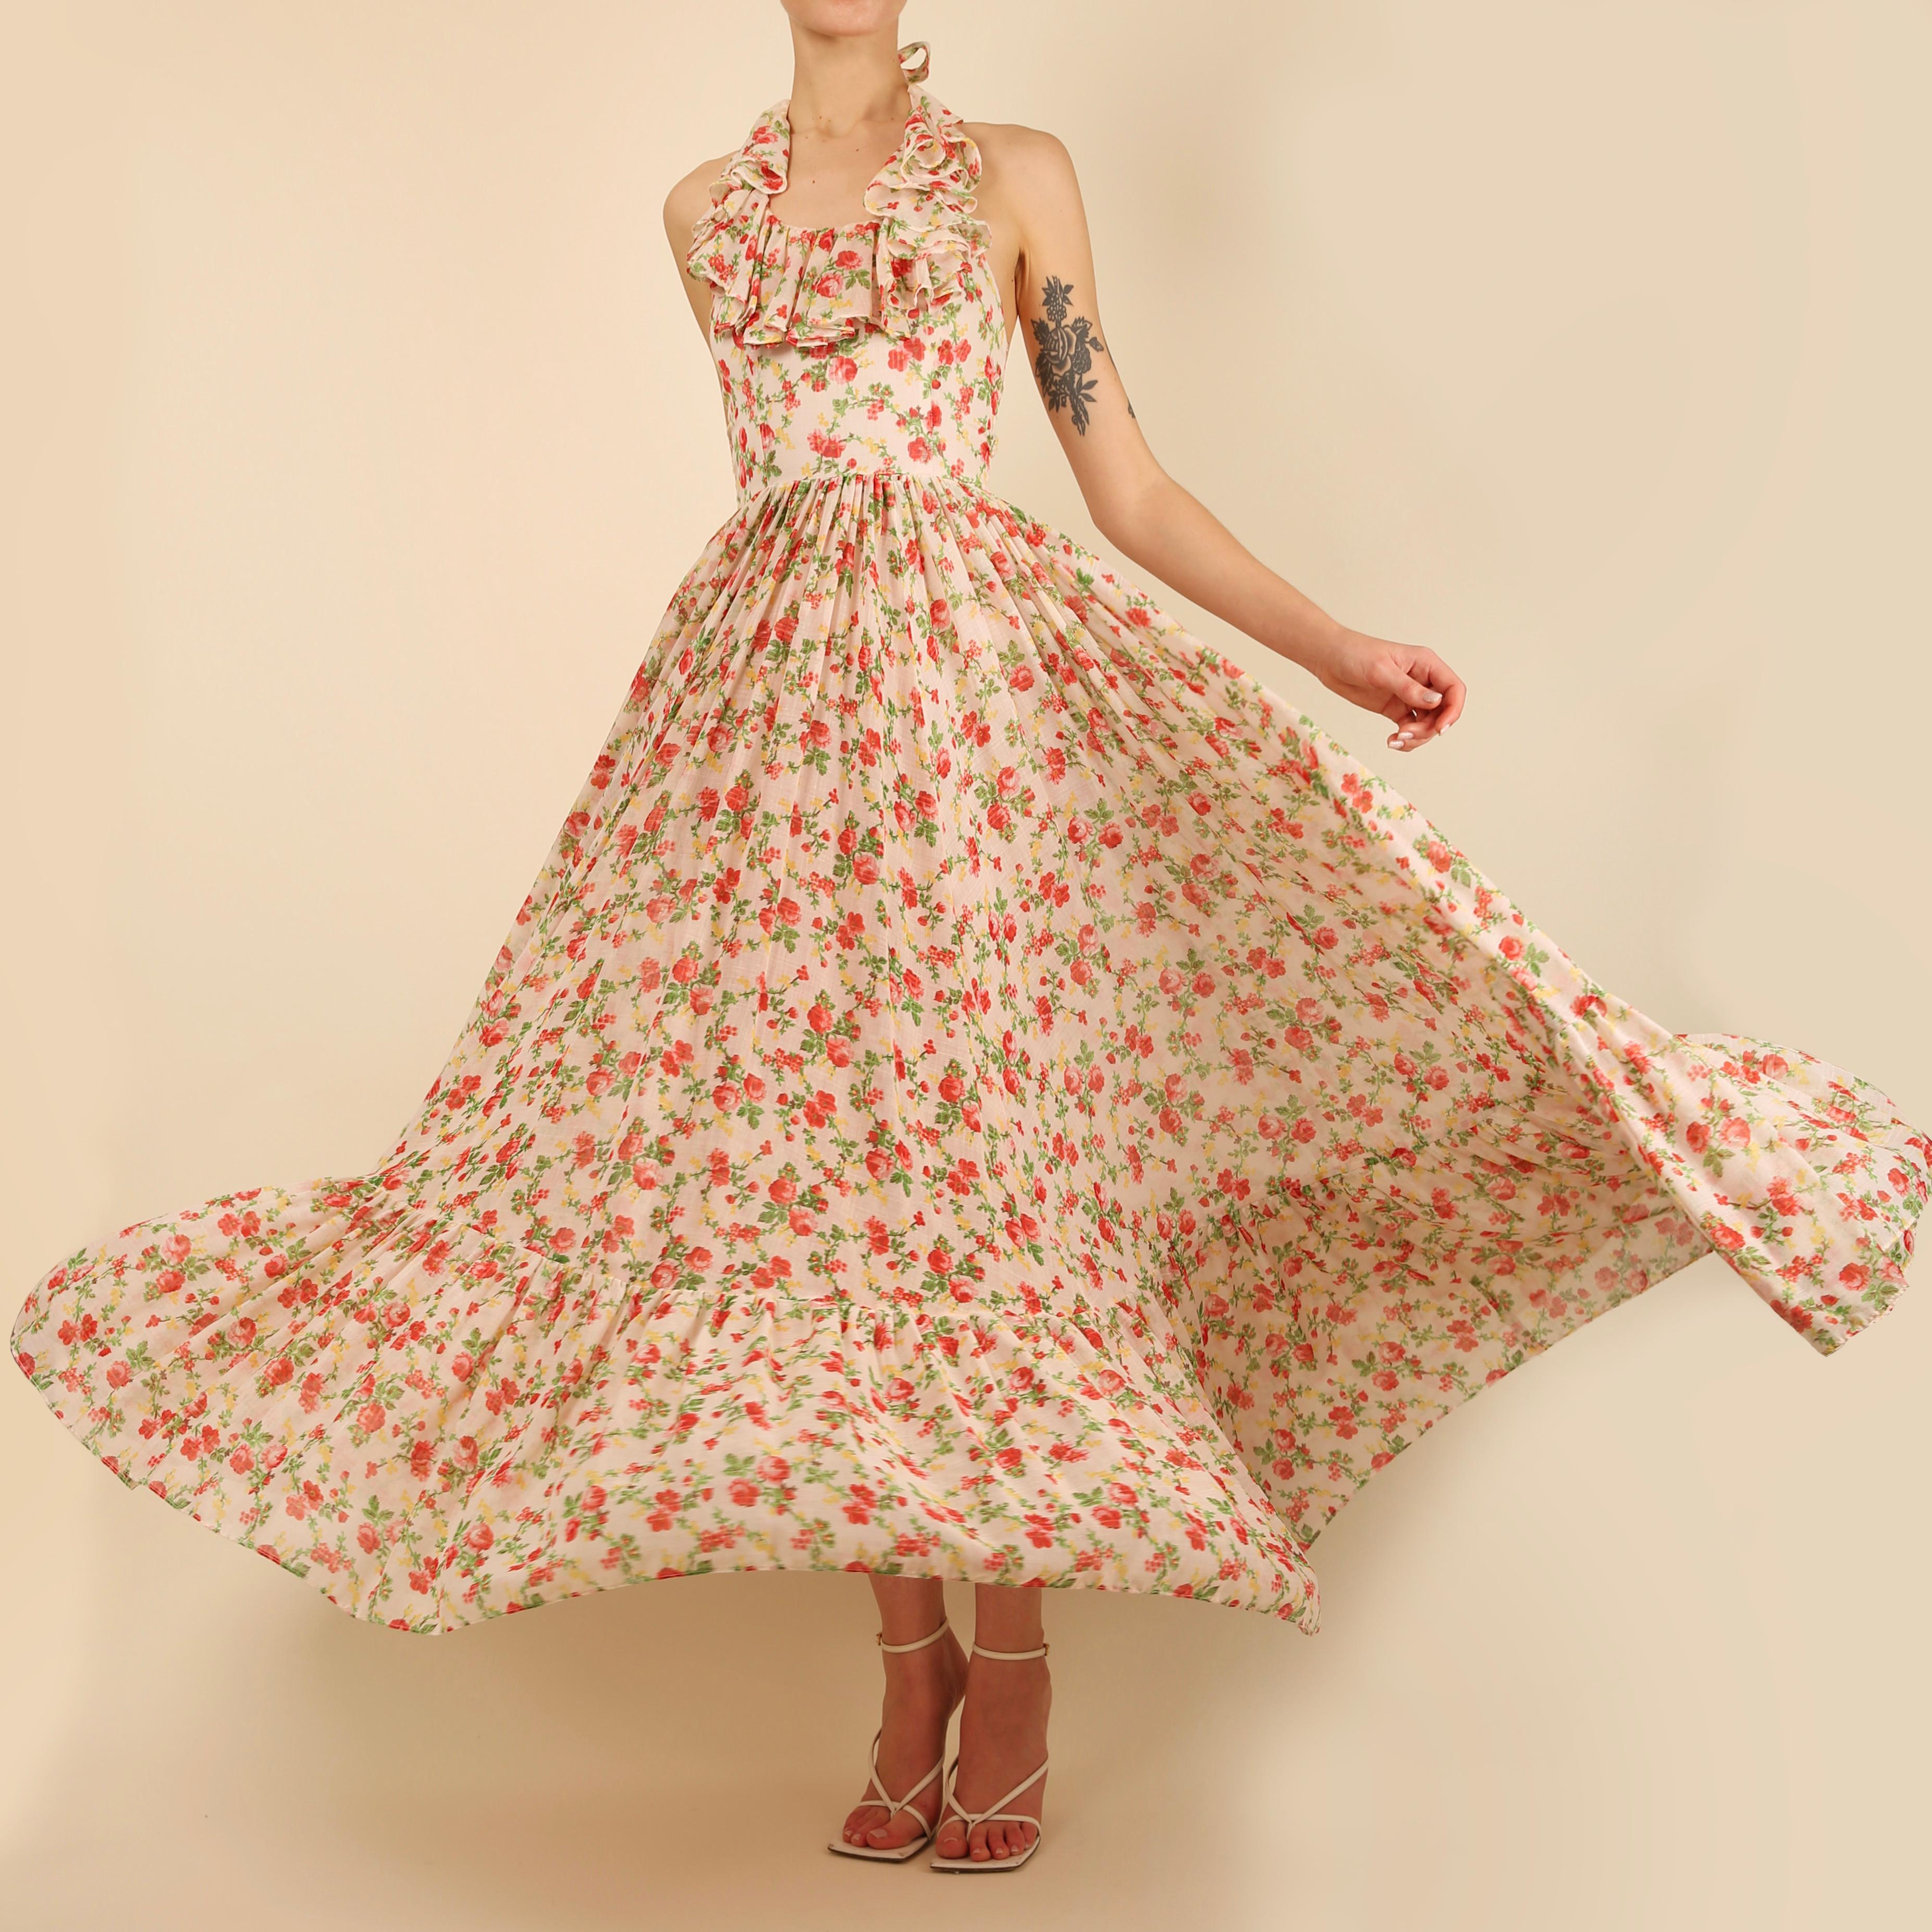 Vintage cottagecore prairie cotton white red floral print halter backless dress For Sale 3